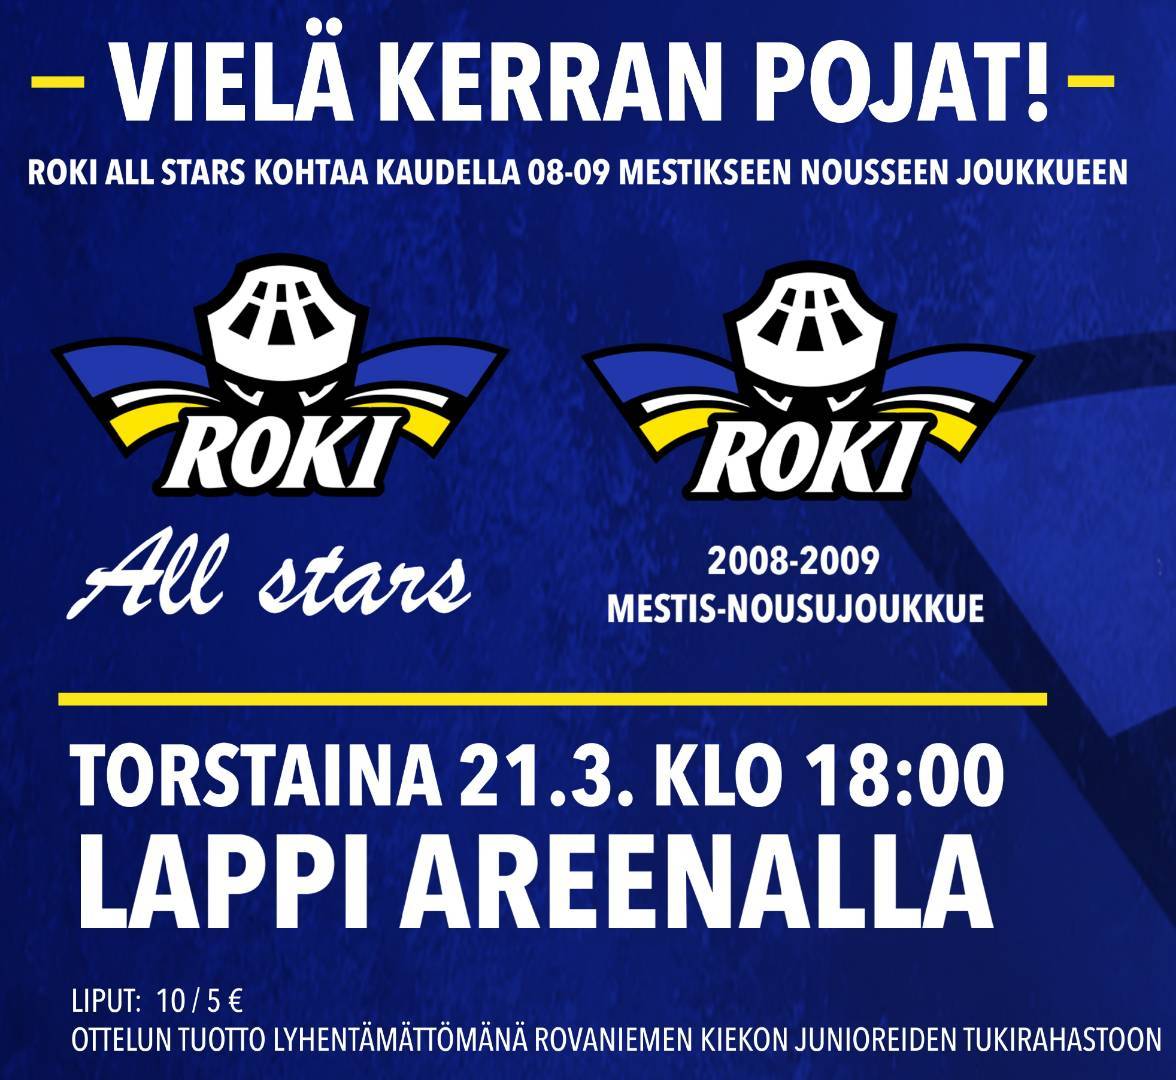 40 v. - juhlavuoden tapahtumat jatkuvat - RoKi Allstar vs. RoKi 08/09 